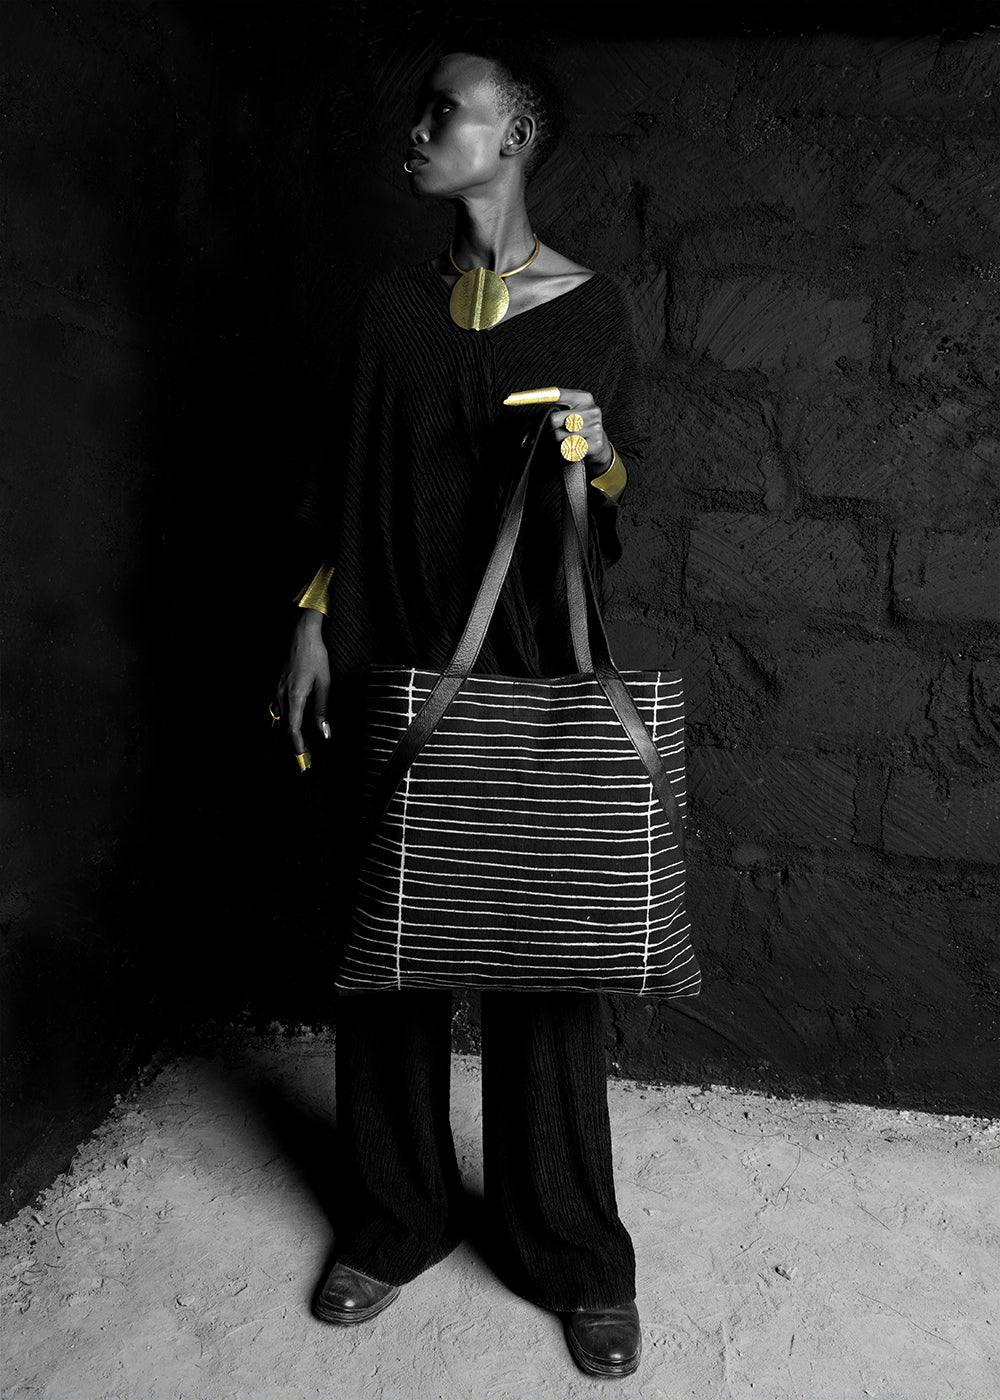 Baka Mud Cloth Bag, a product by Adele Dejak